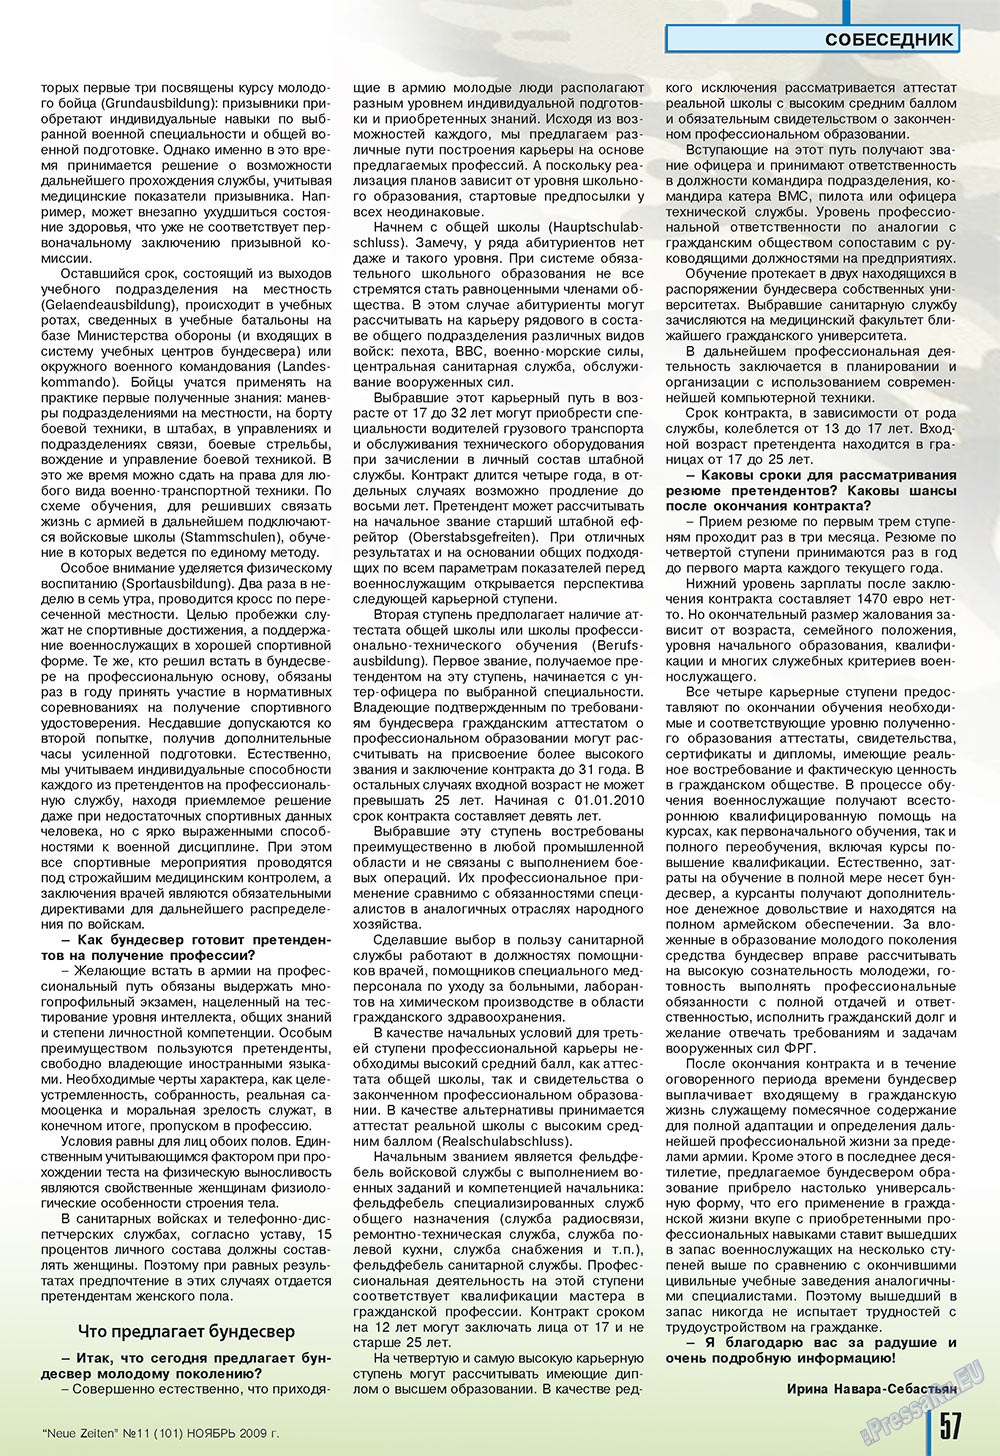 Neue Zeiten (журнал). 2009 год, номер 11, стр. 57